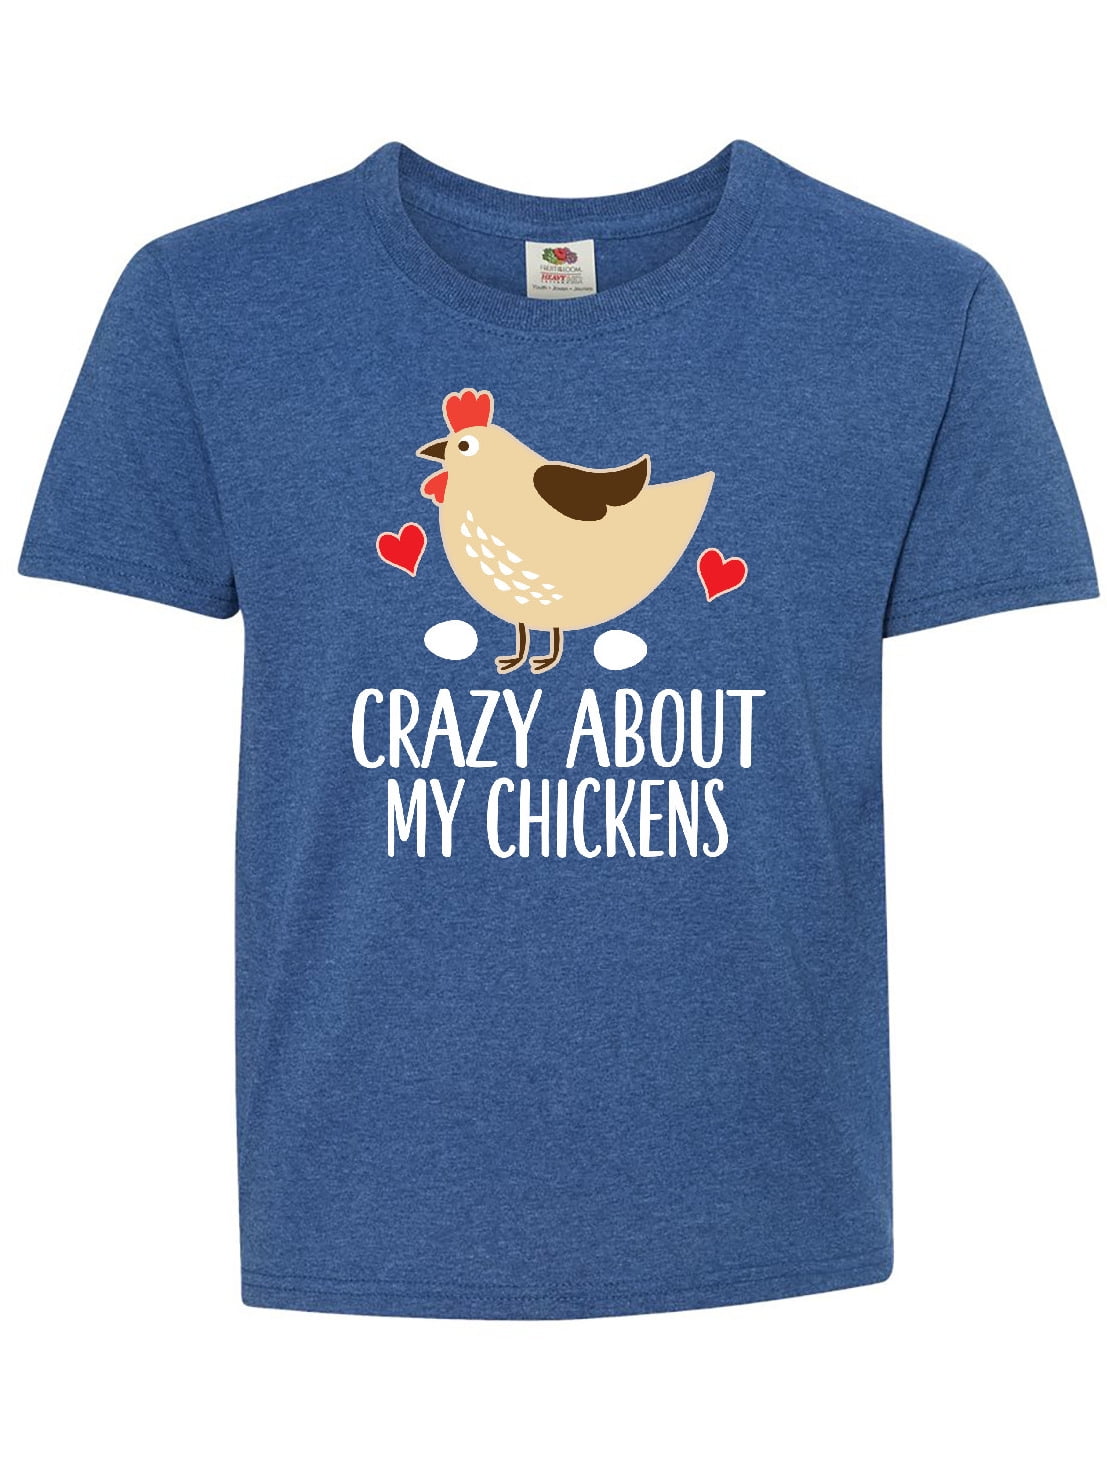 Crazy About My Chickens Youth T-Shirt - Walmart.com - Walmart.com